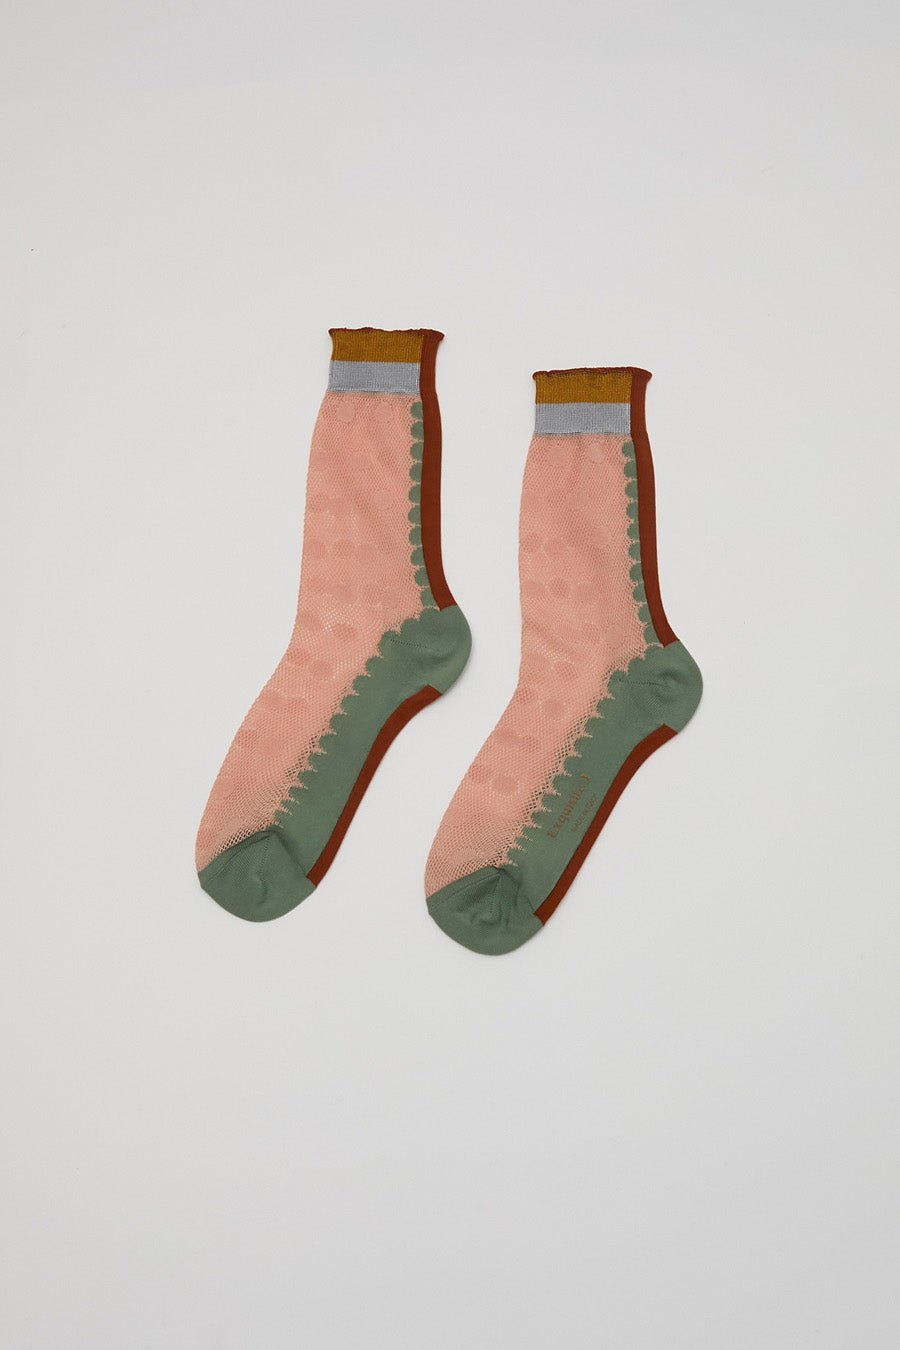 Exquisite J Sheer Dot Print Socks in Mocha